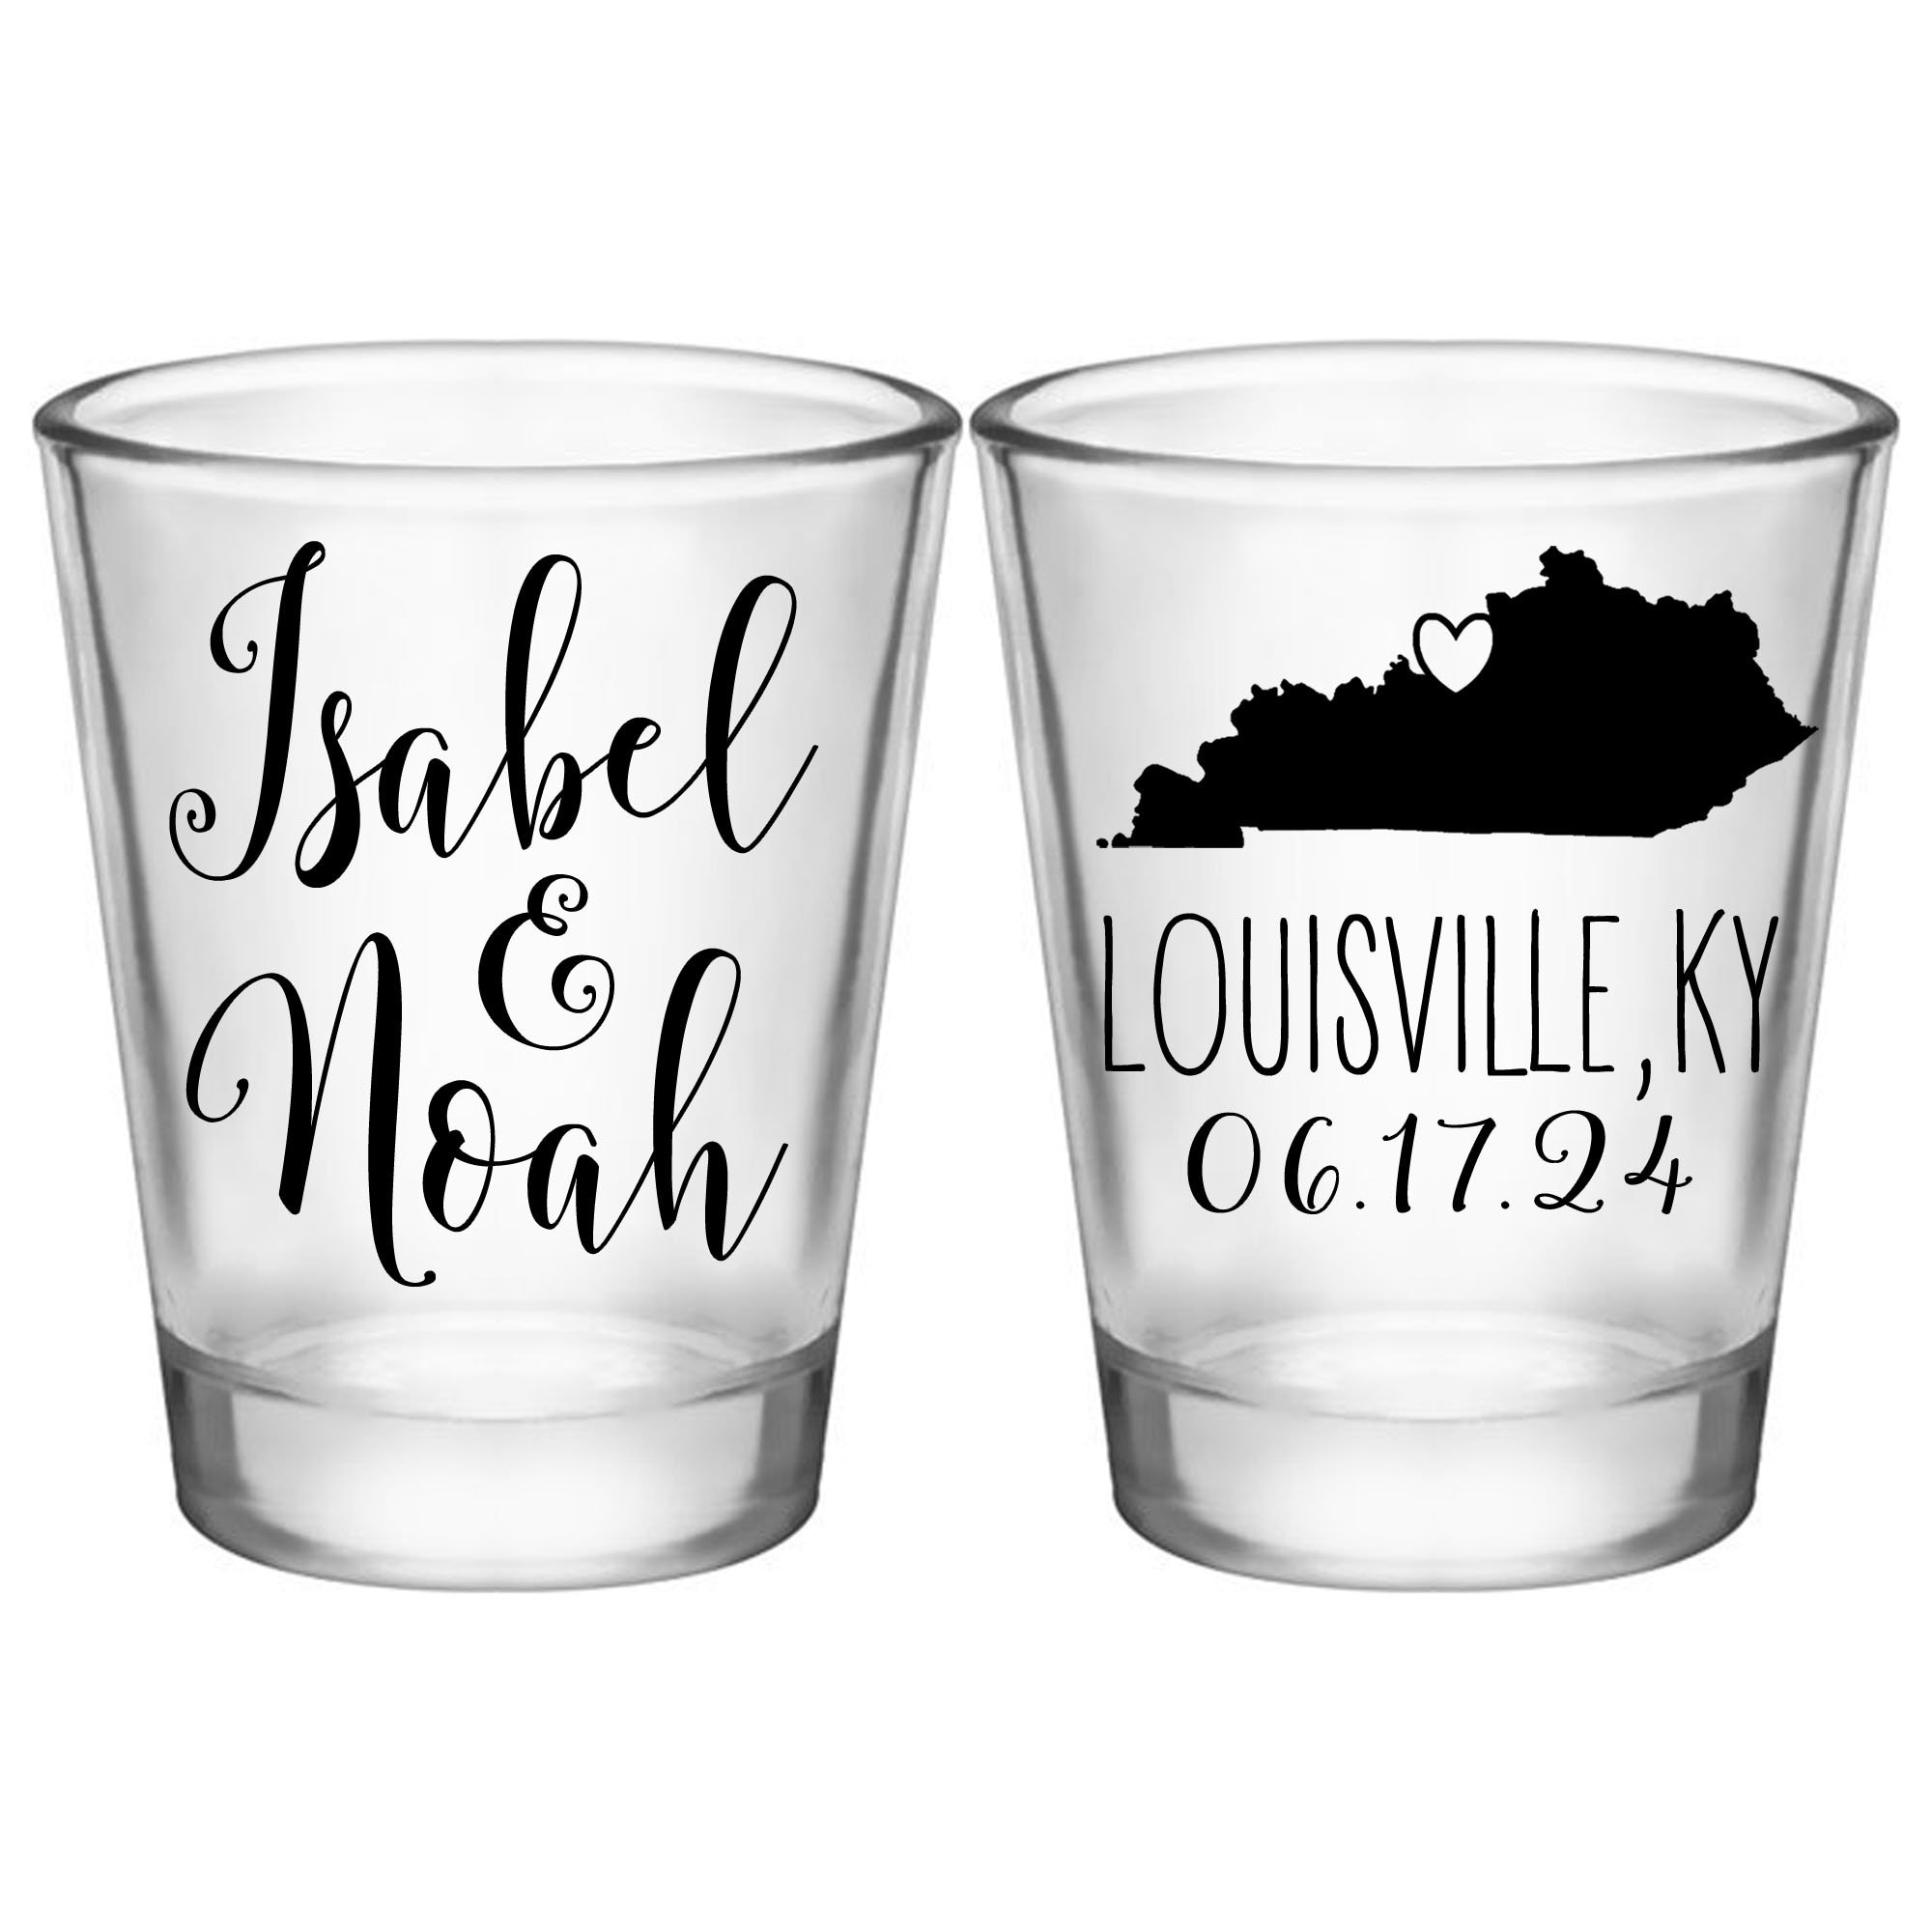 Shot Glasses for sale in Louisville, Kentucky